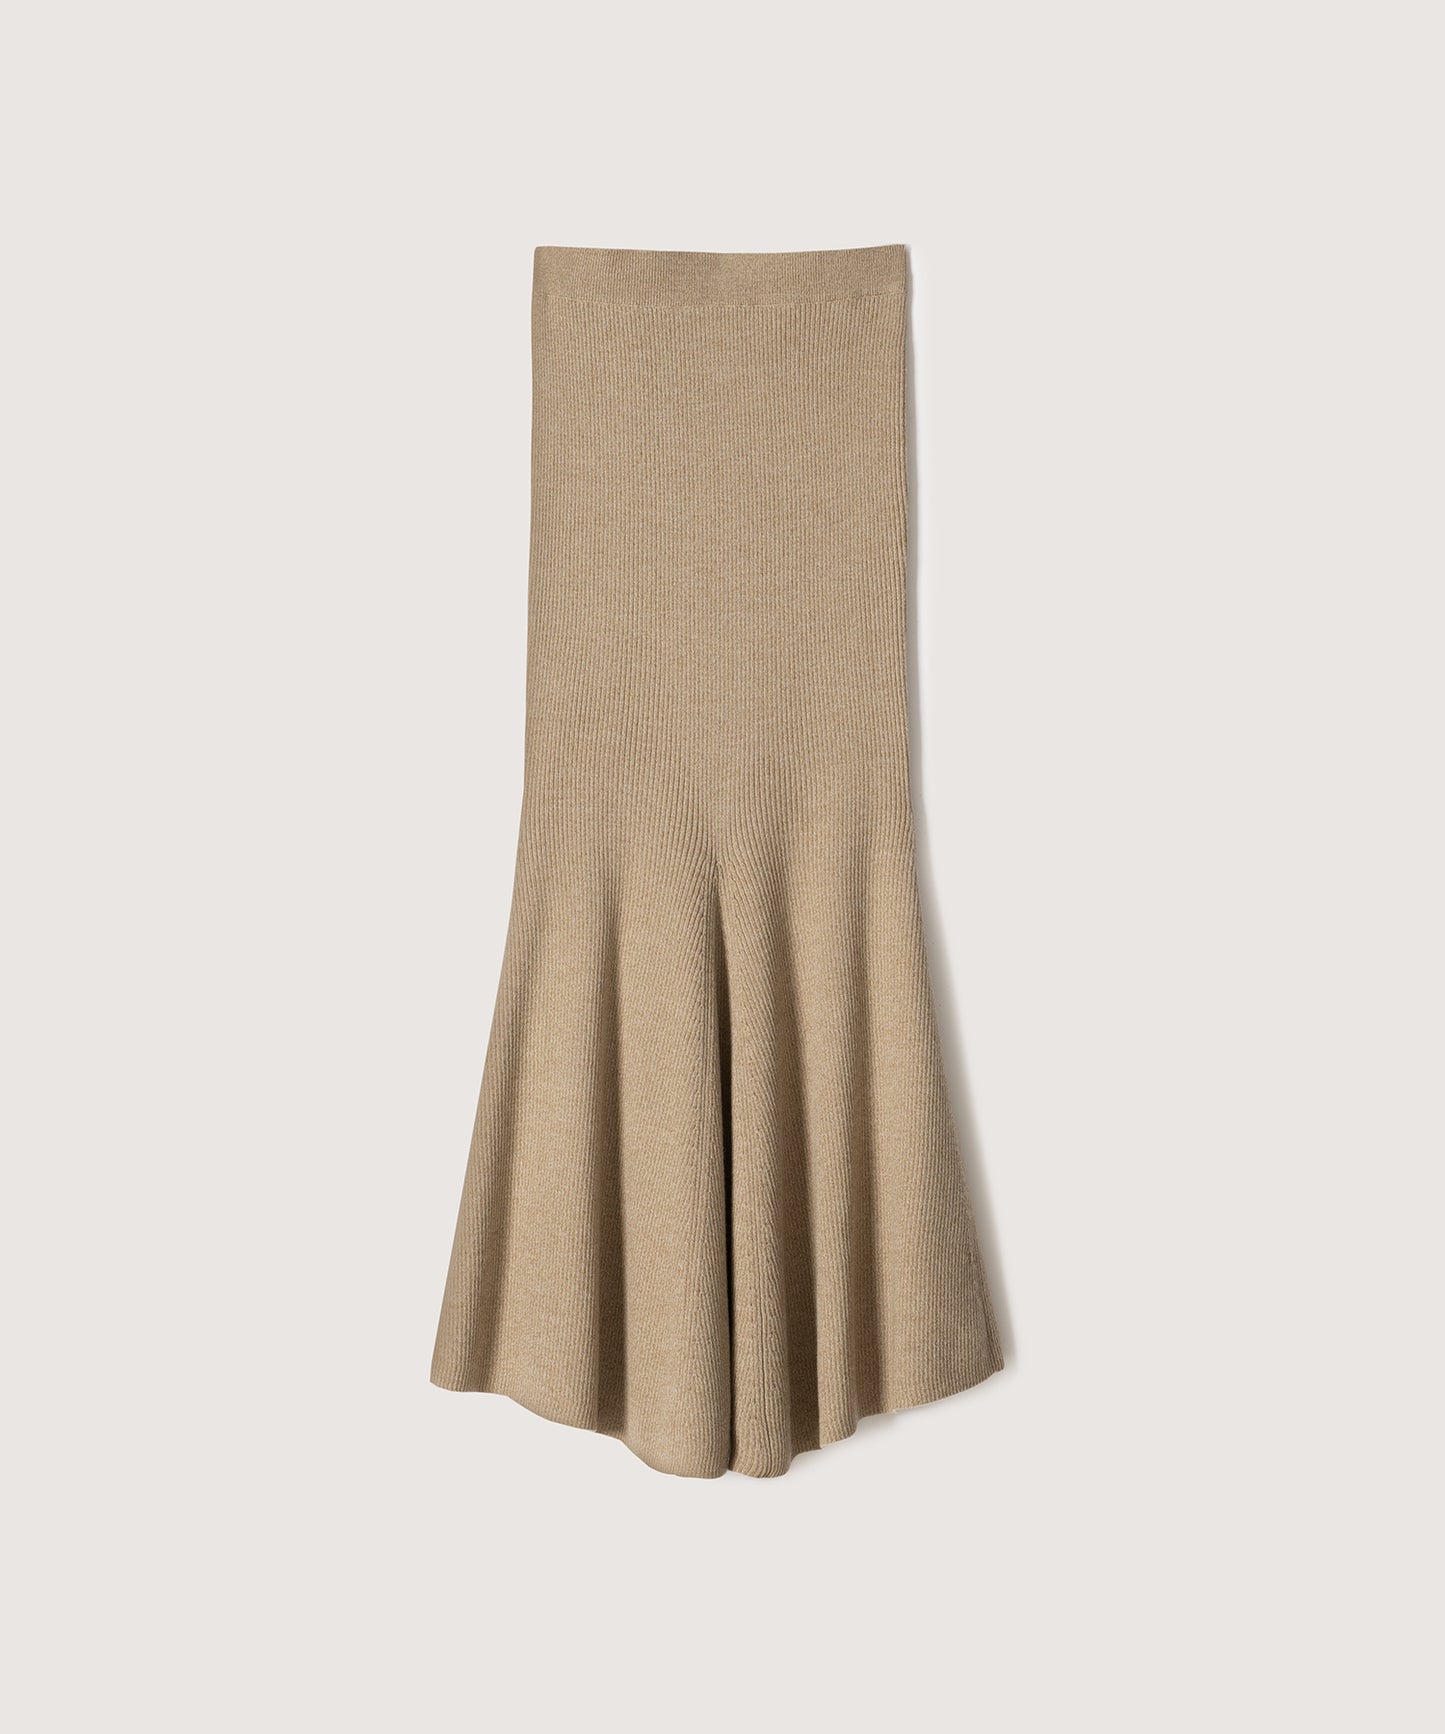 Alina - Sale Wool-Blend Skirt - Beige